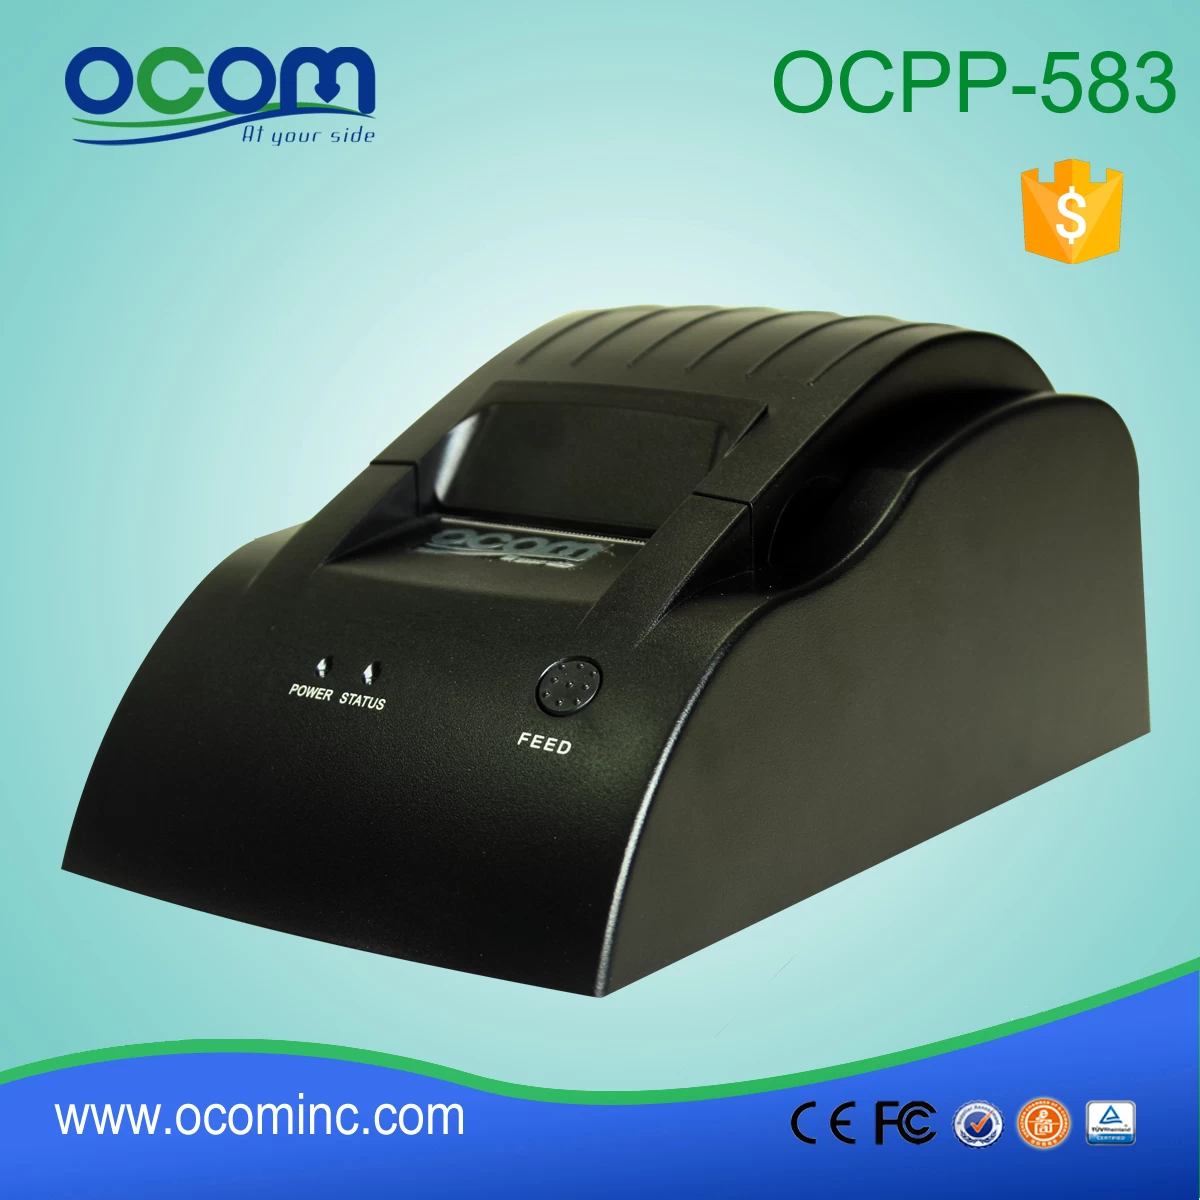 China made 58mm small POS printer-OCPP-583